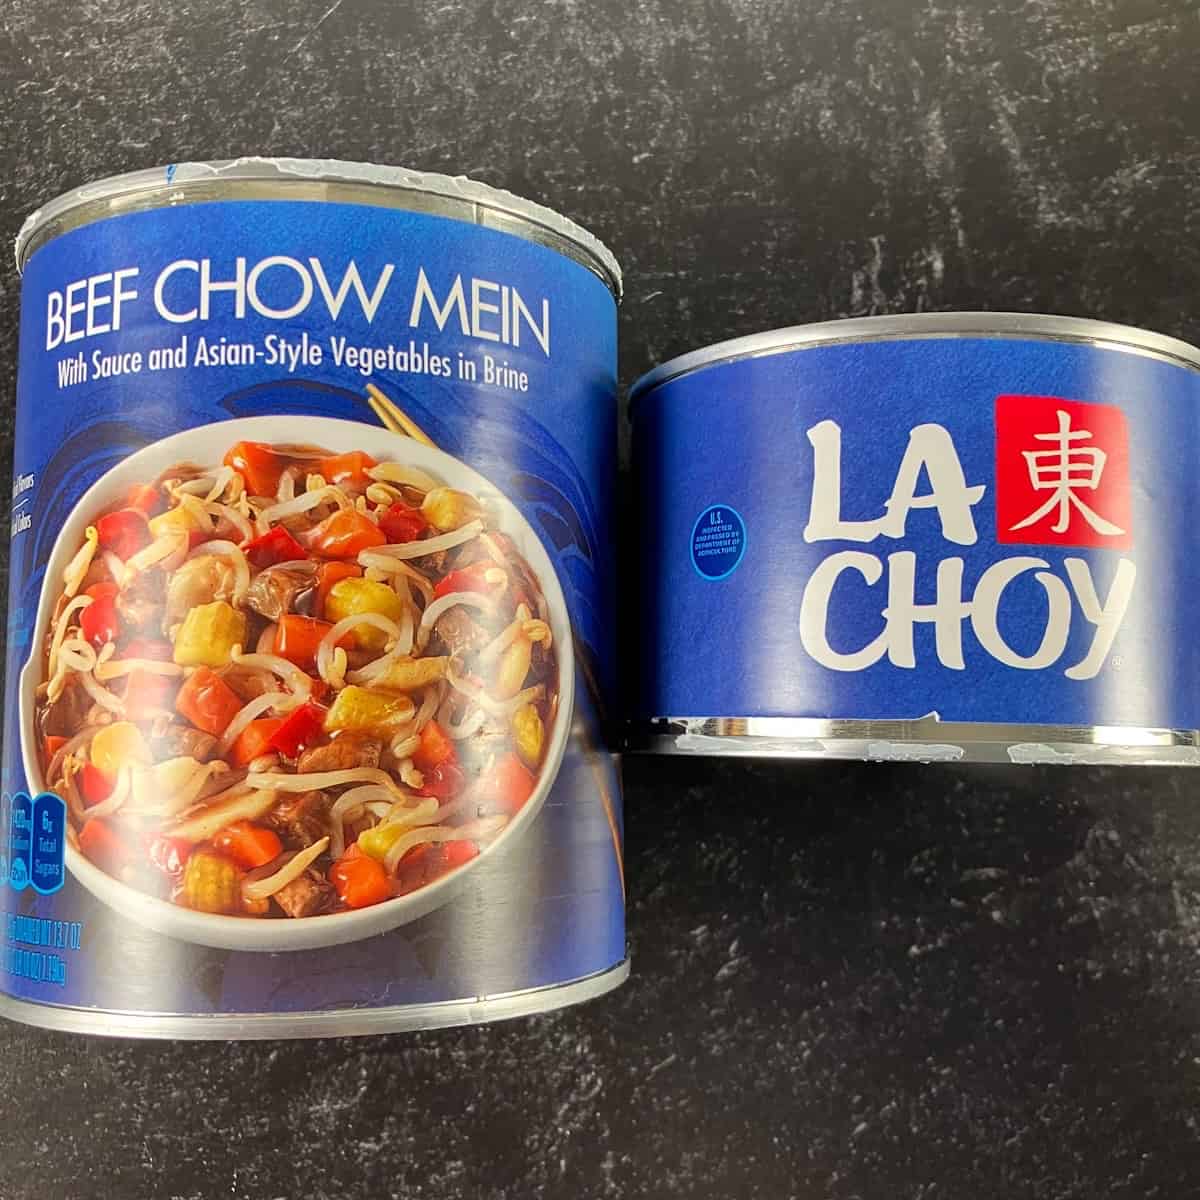 la choy beef chow mein